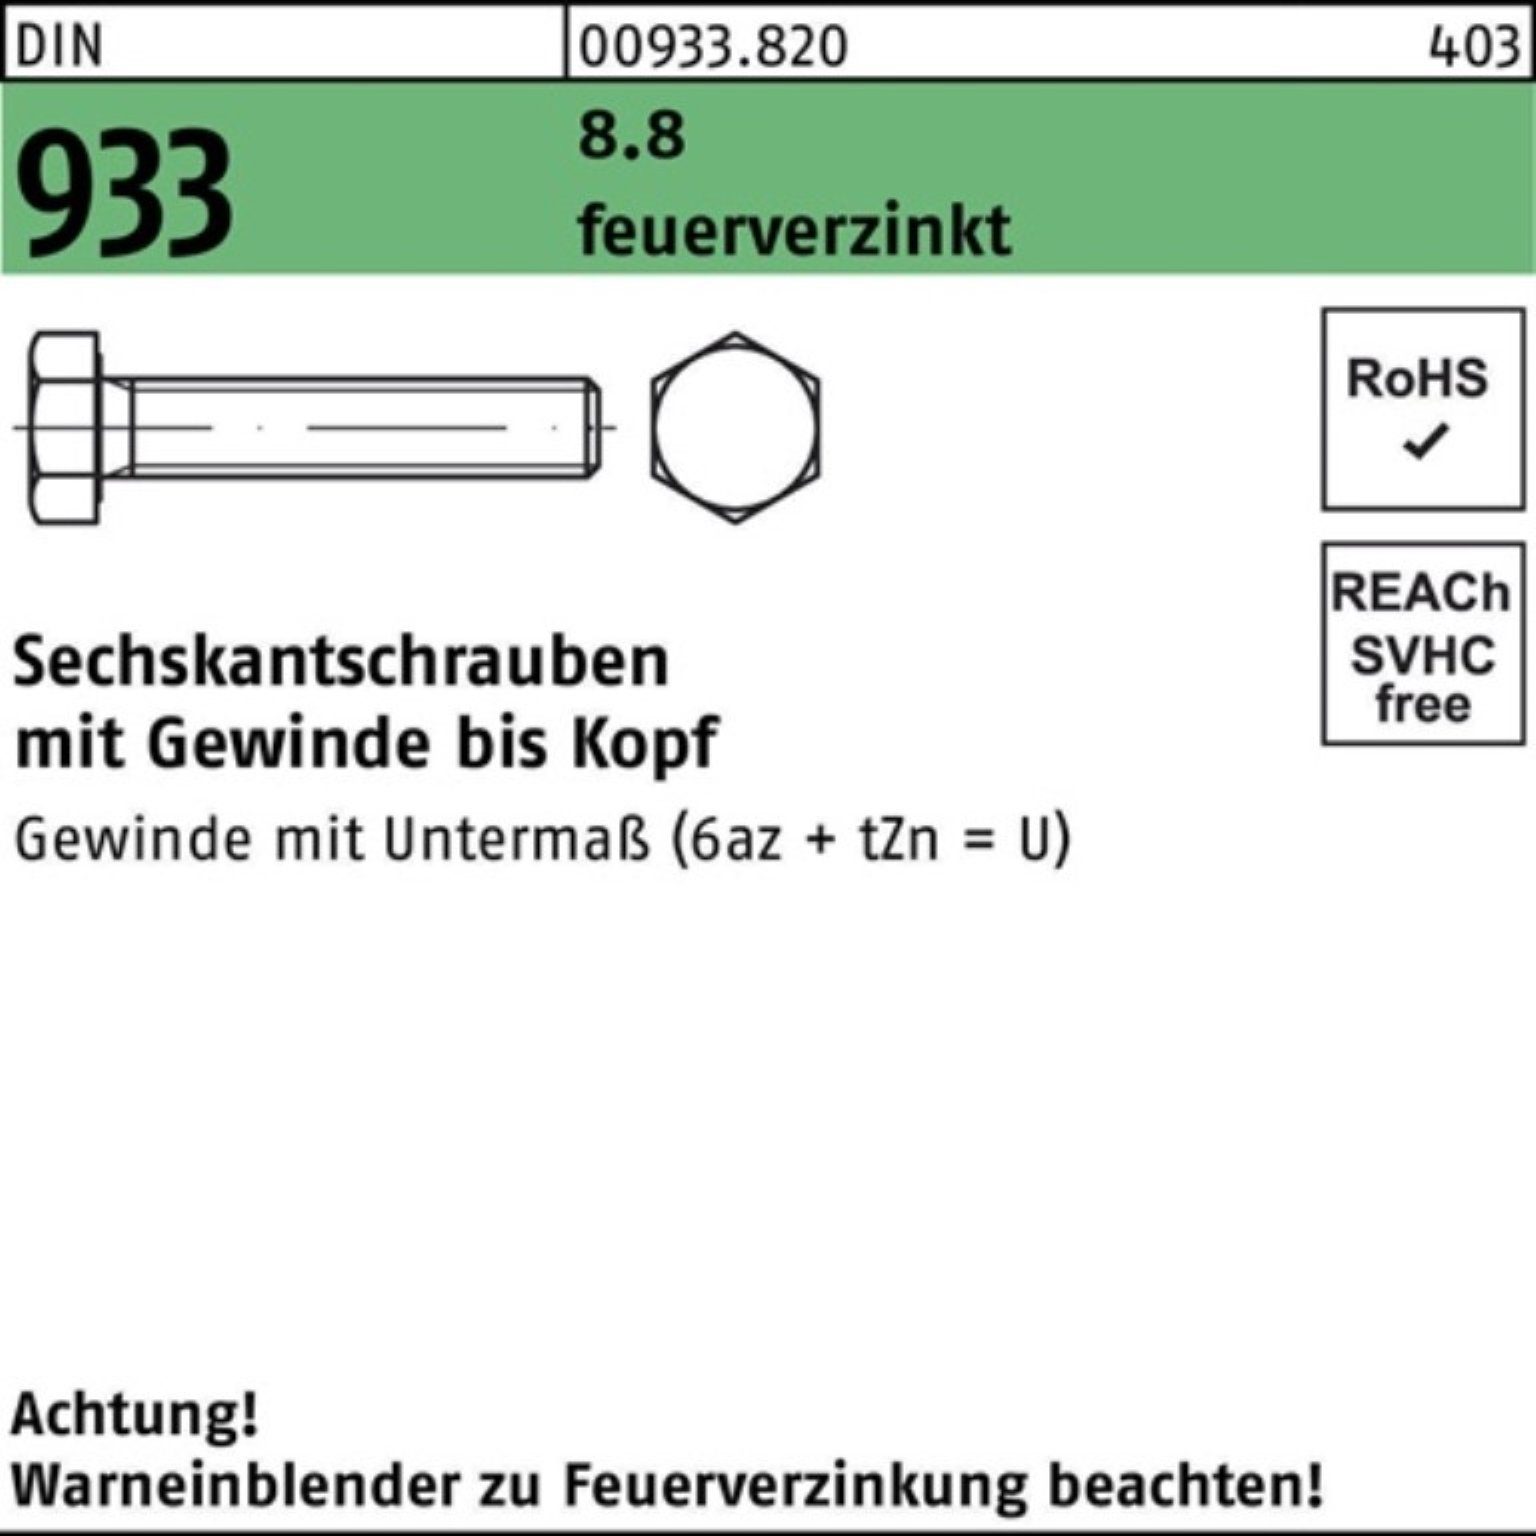 Reyher DIN 100er feuerverz. 8.8 VG M24x 50 Pack 25 Sechskantschraube Stü 933 Sechskantschraube